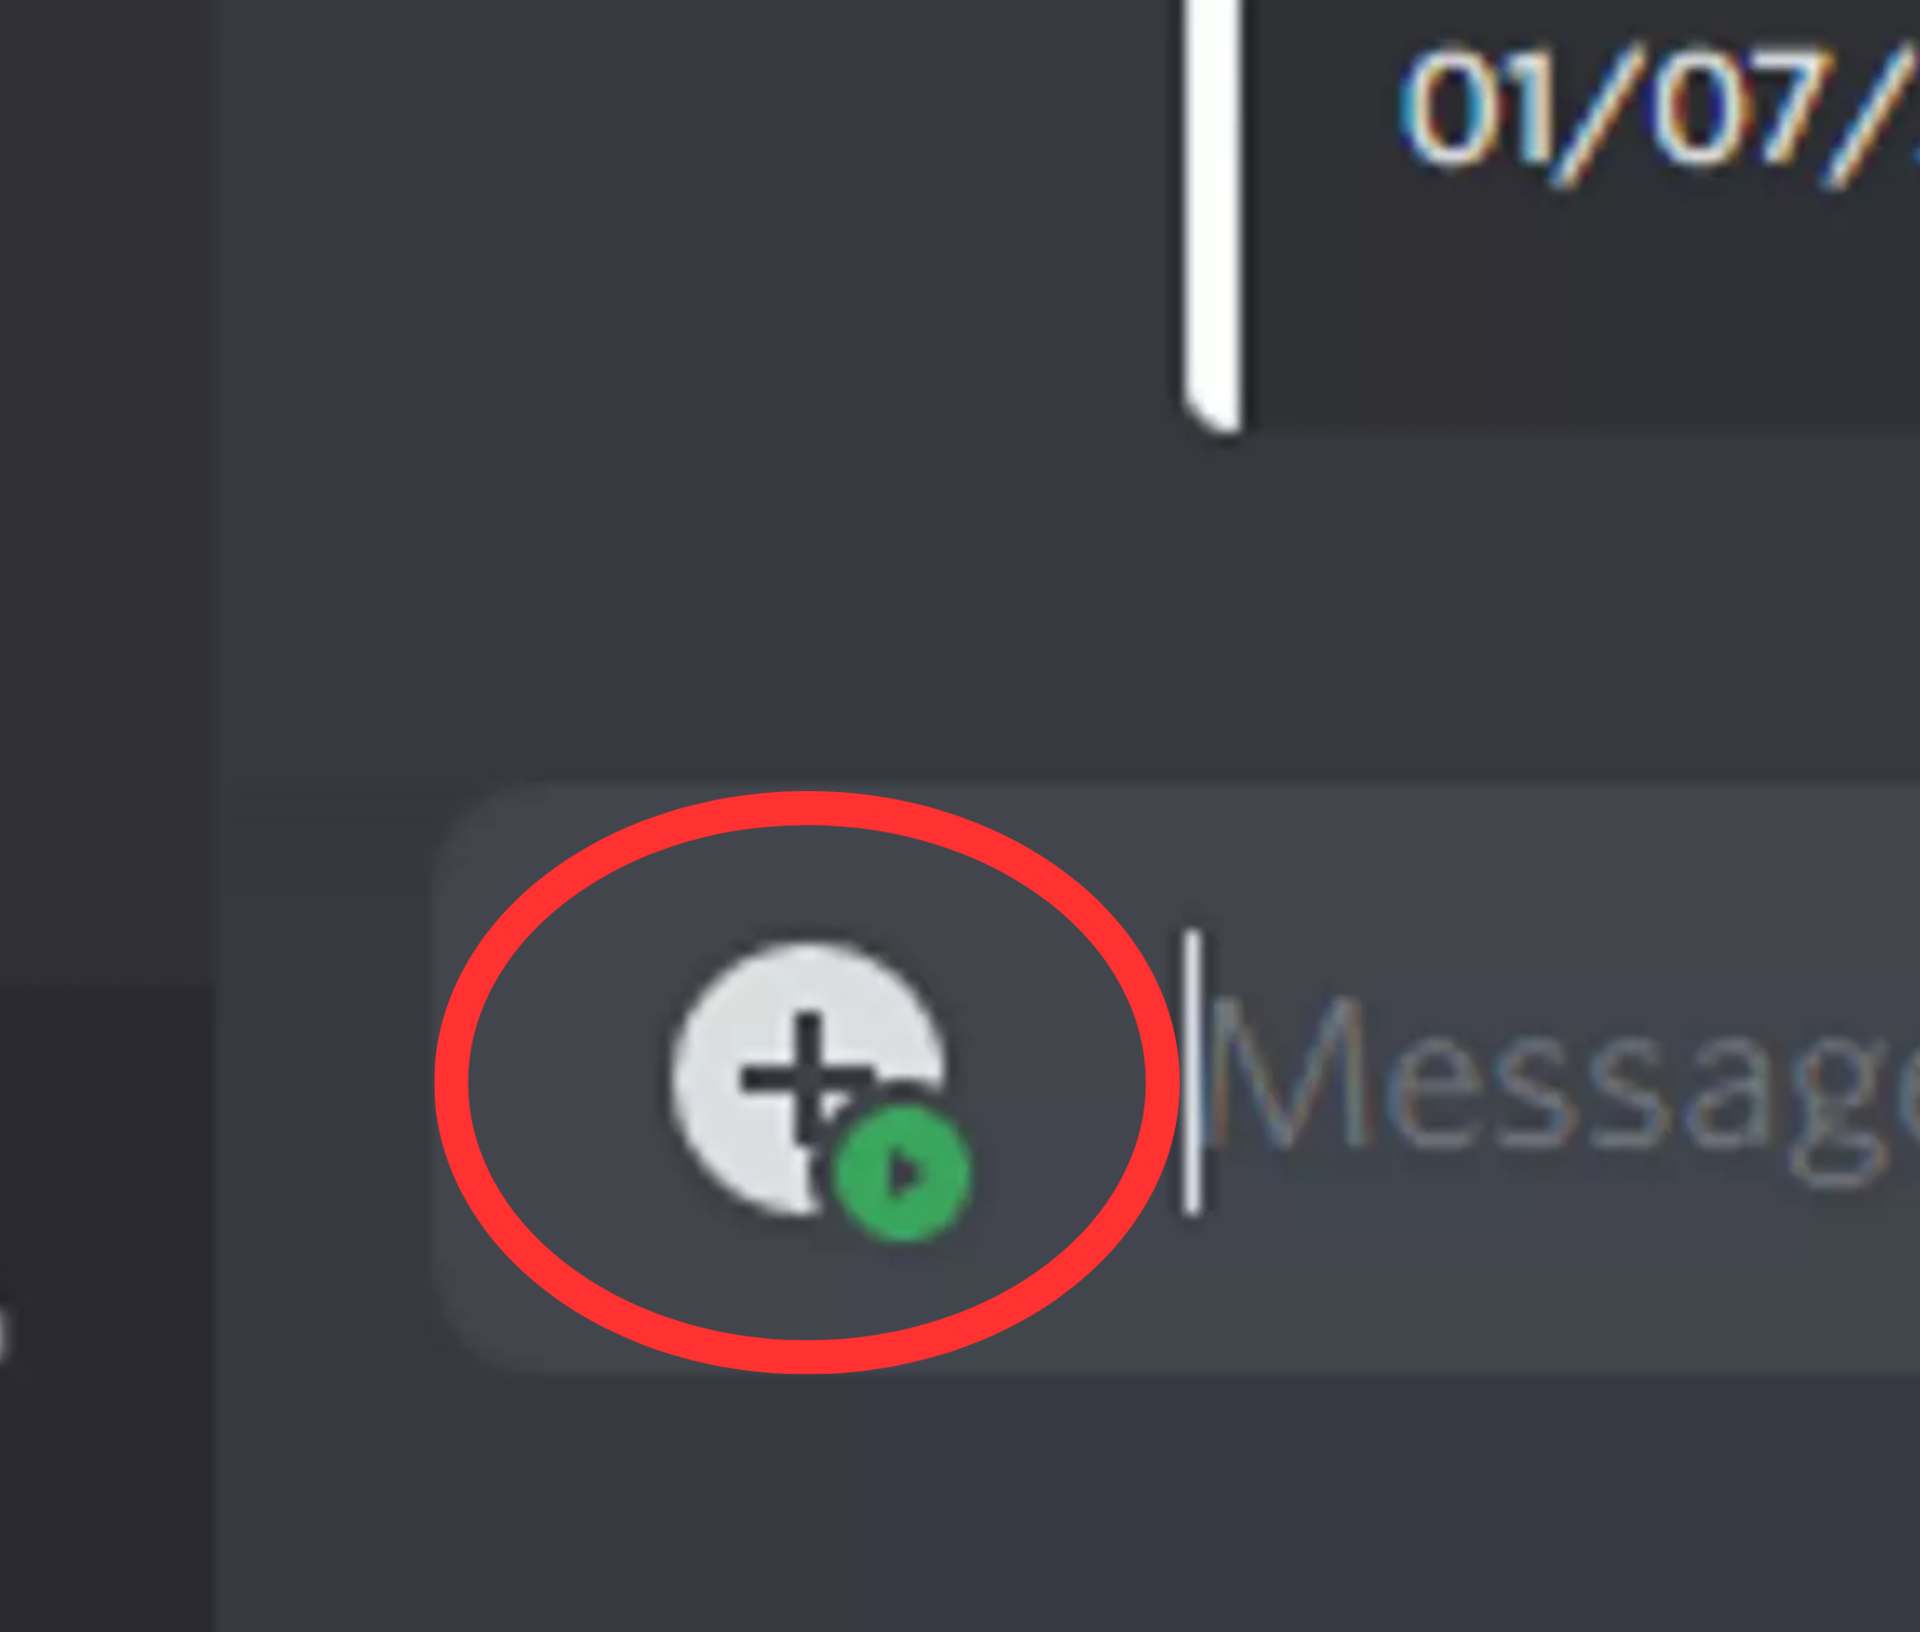 discord message box plus icon green circle